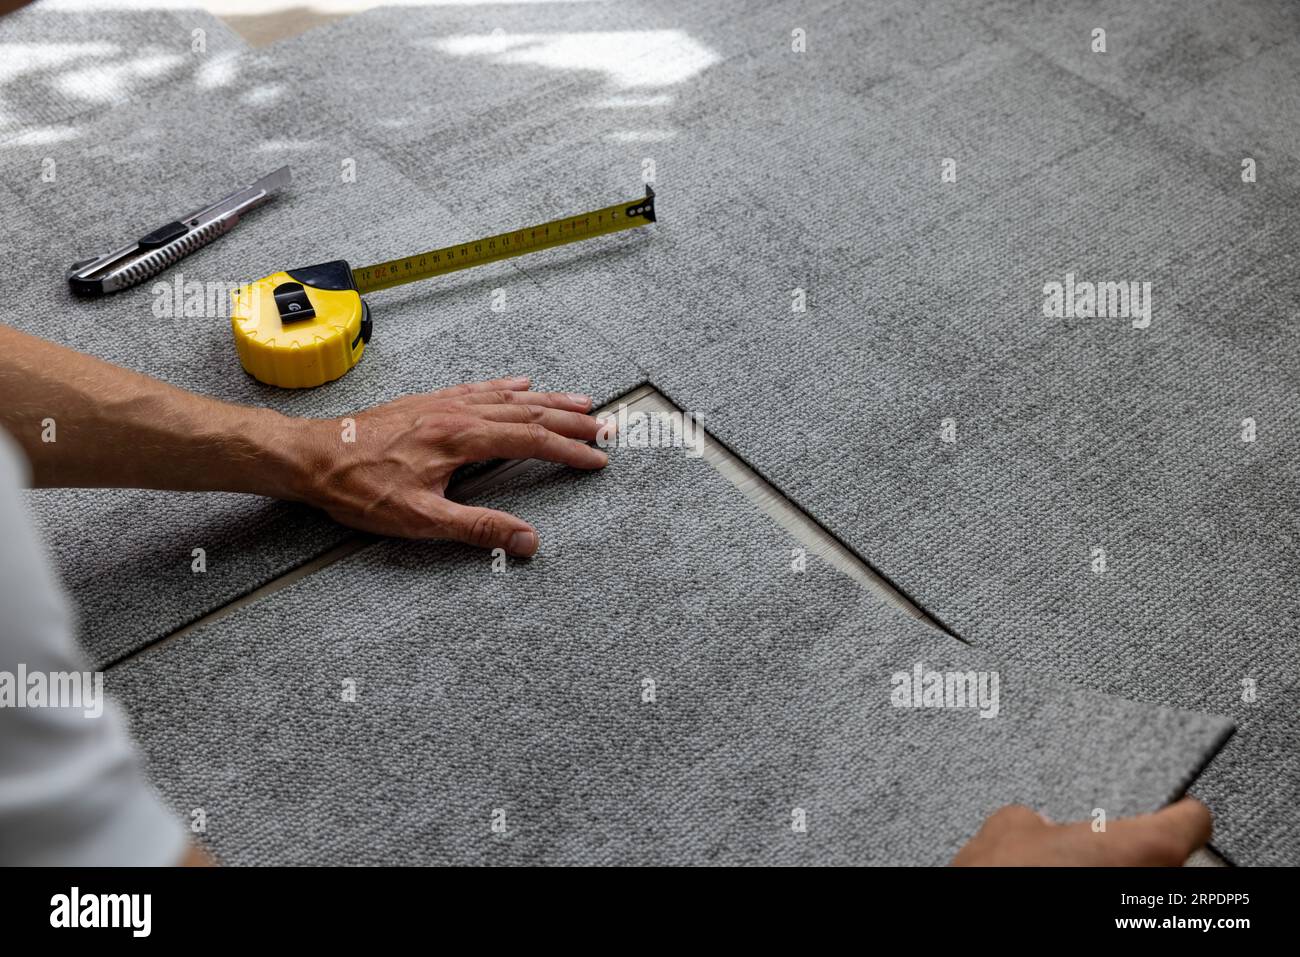 worker installing carpet tiles on the floor Stock Photo